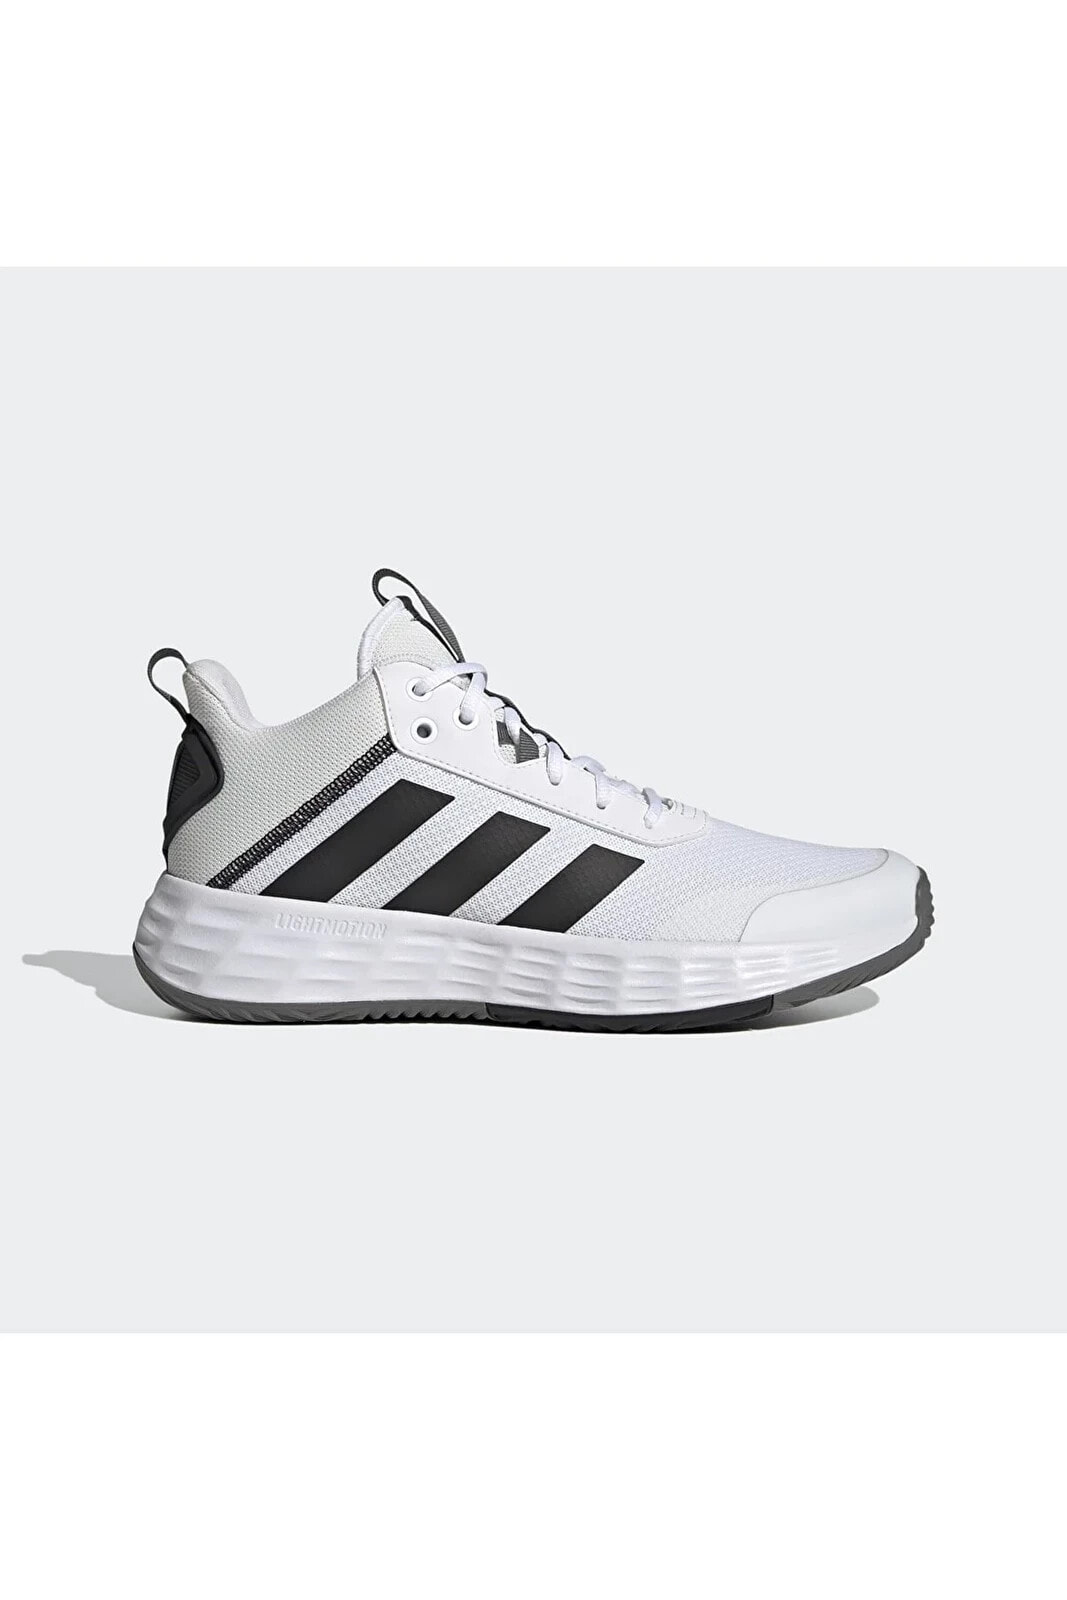 H00469 Adidas Ownthegame 2.0 Beyaz Siyah Basketbol Ayakkabısı